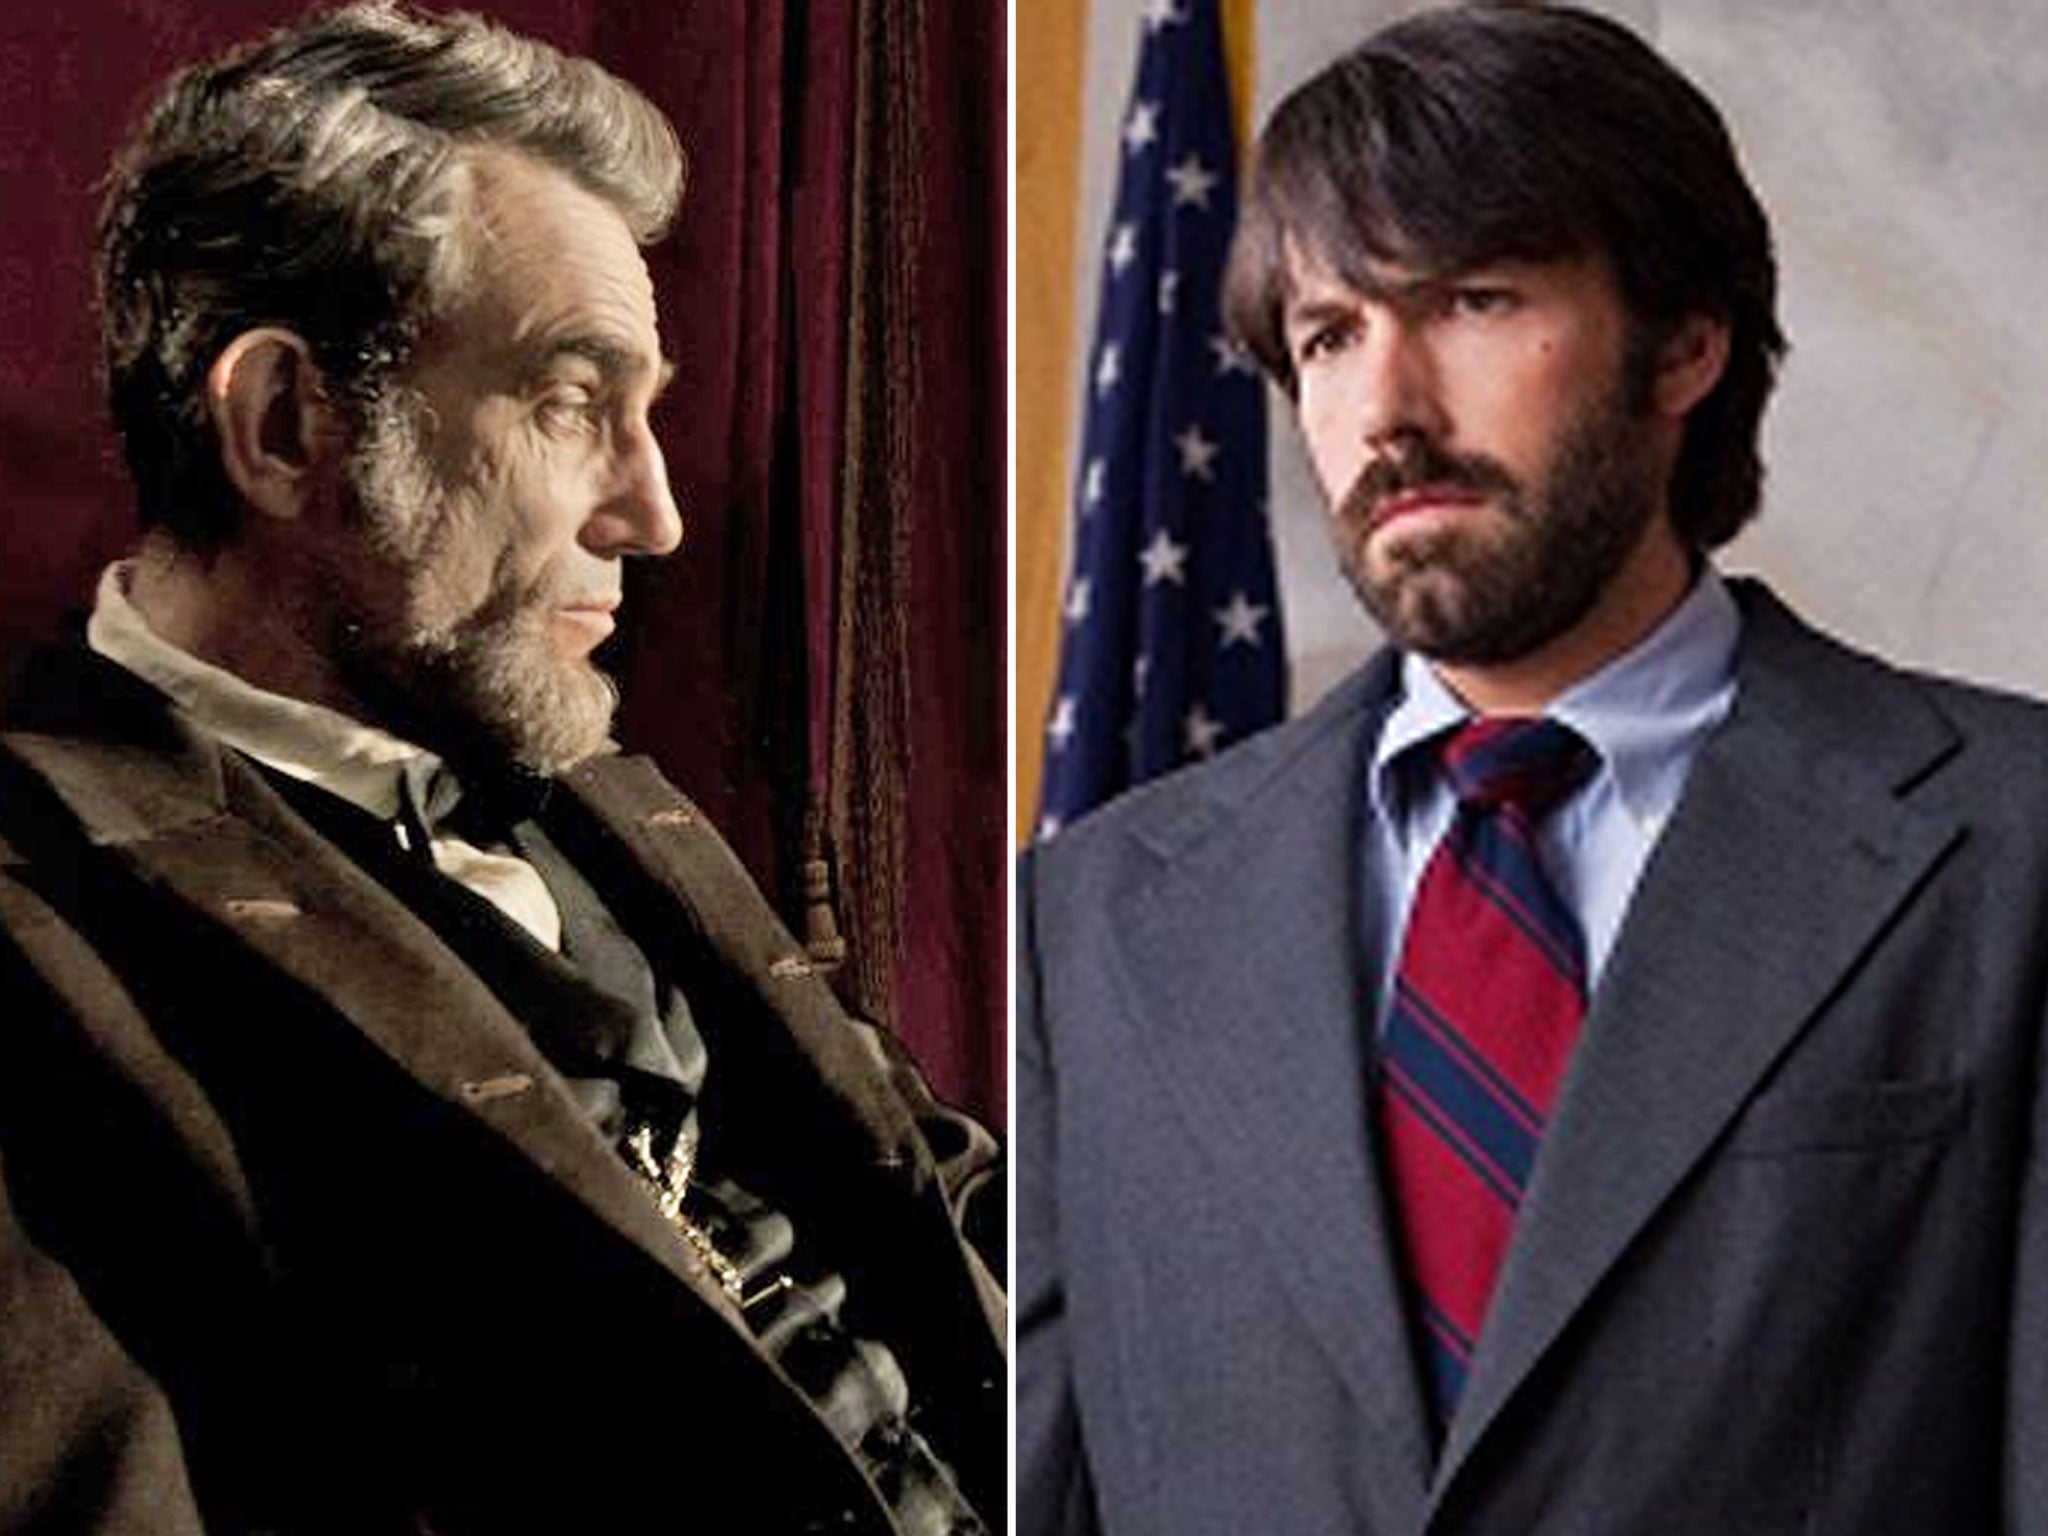 Oscar hopefuls: Daniel Day- Lewis in ‘Lincoln’, left, and Ben Affleck in ‘Argo’